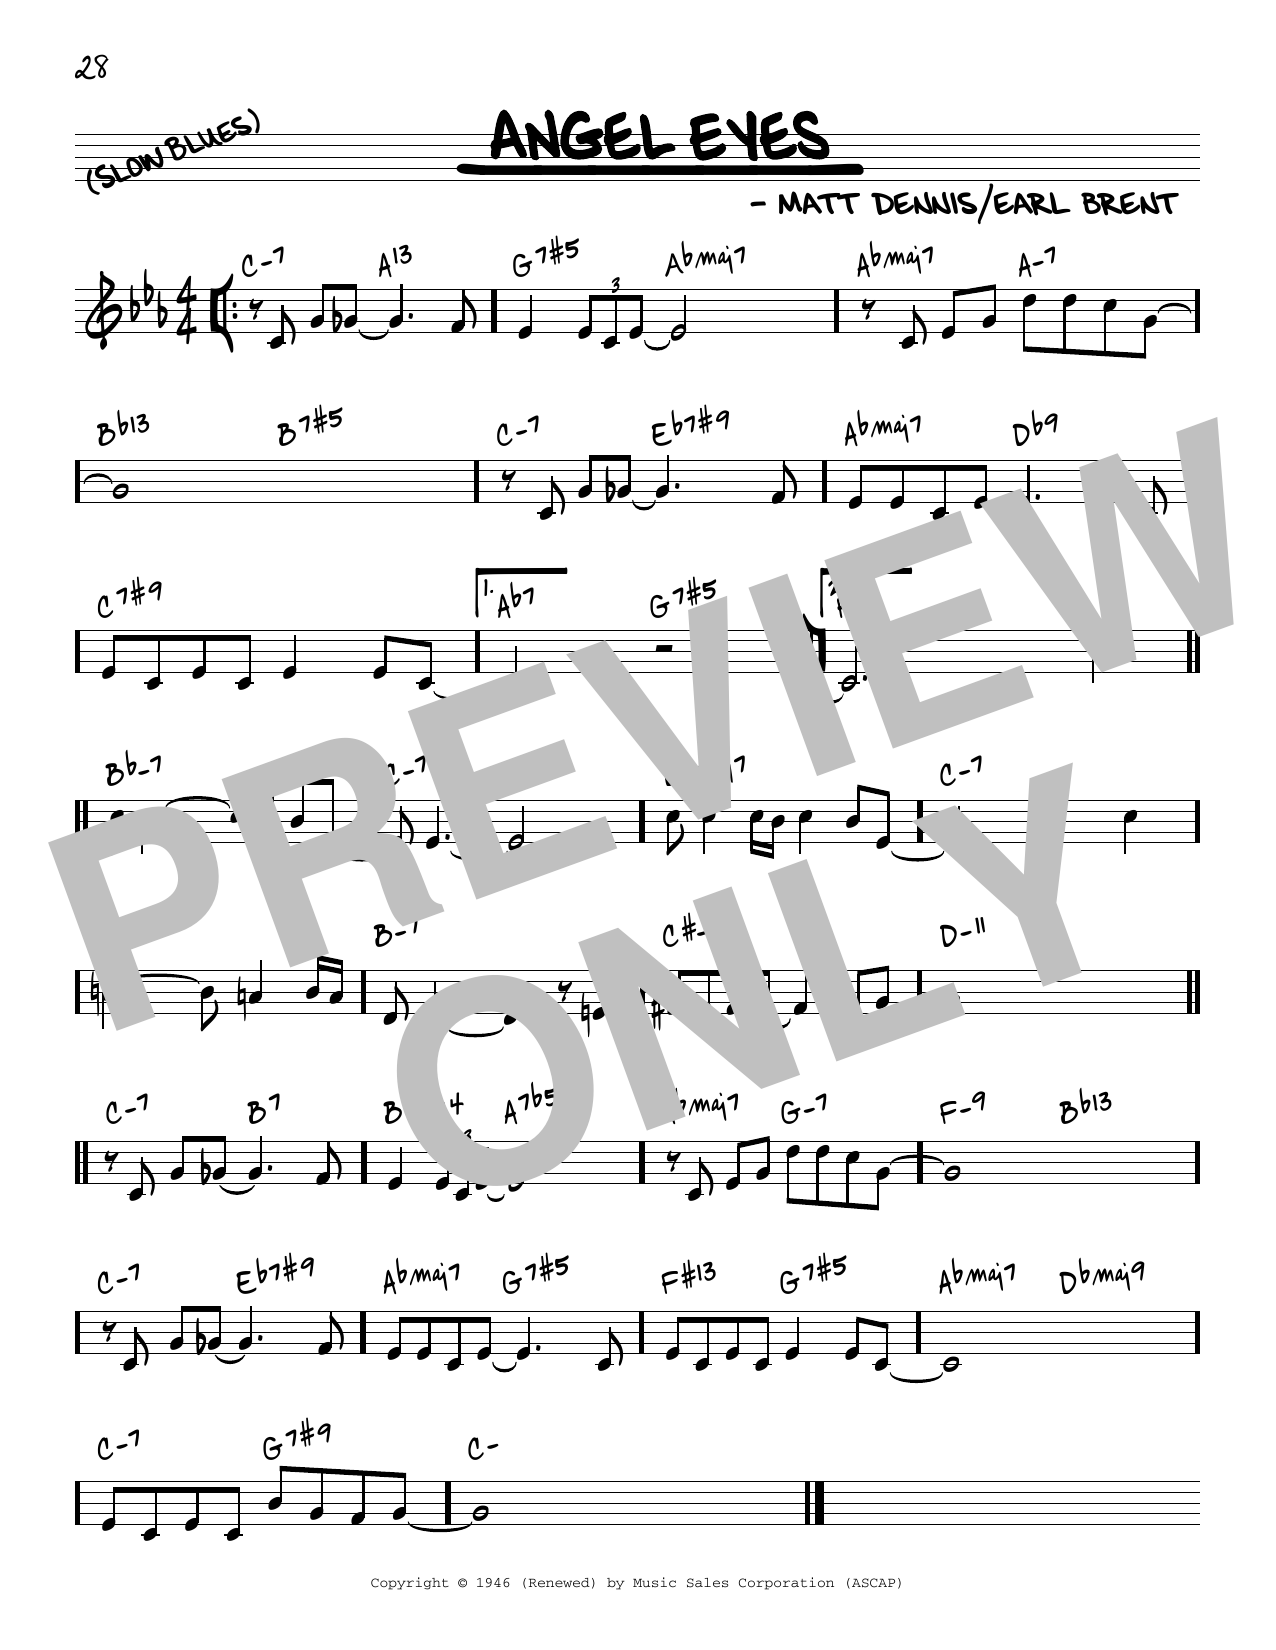 Matt Dennis Angel Eyes [Reharmonized version] (arr. Jack Grassel) Sheet Music Notes & Chords for Real Book – Melody & Chords - Download or Print PDF